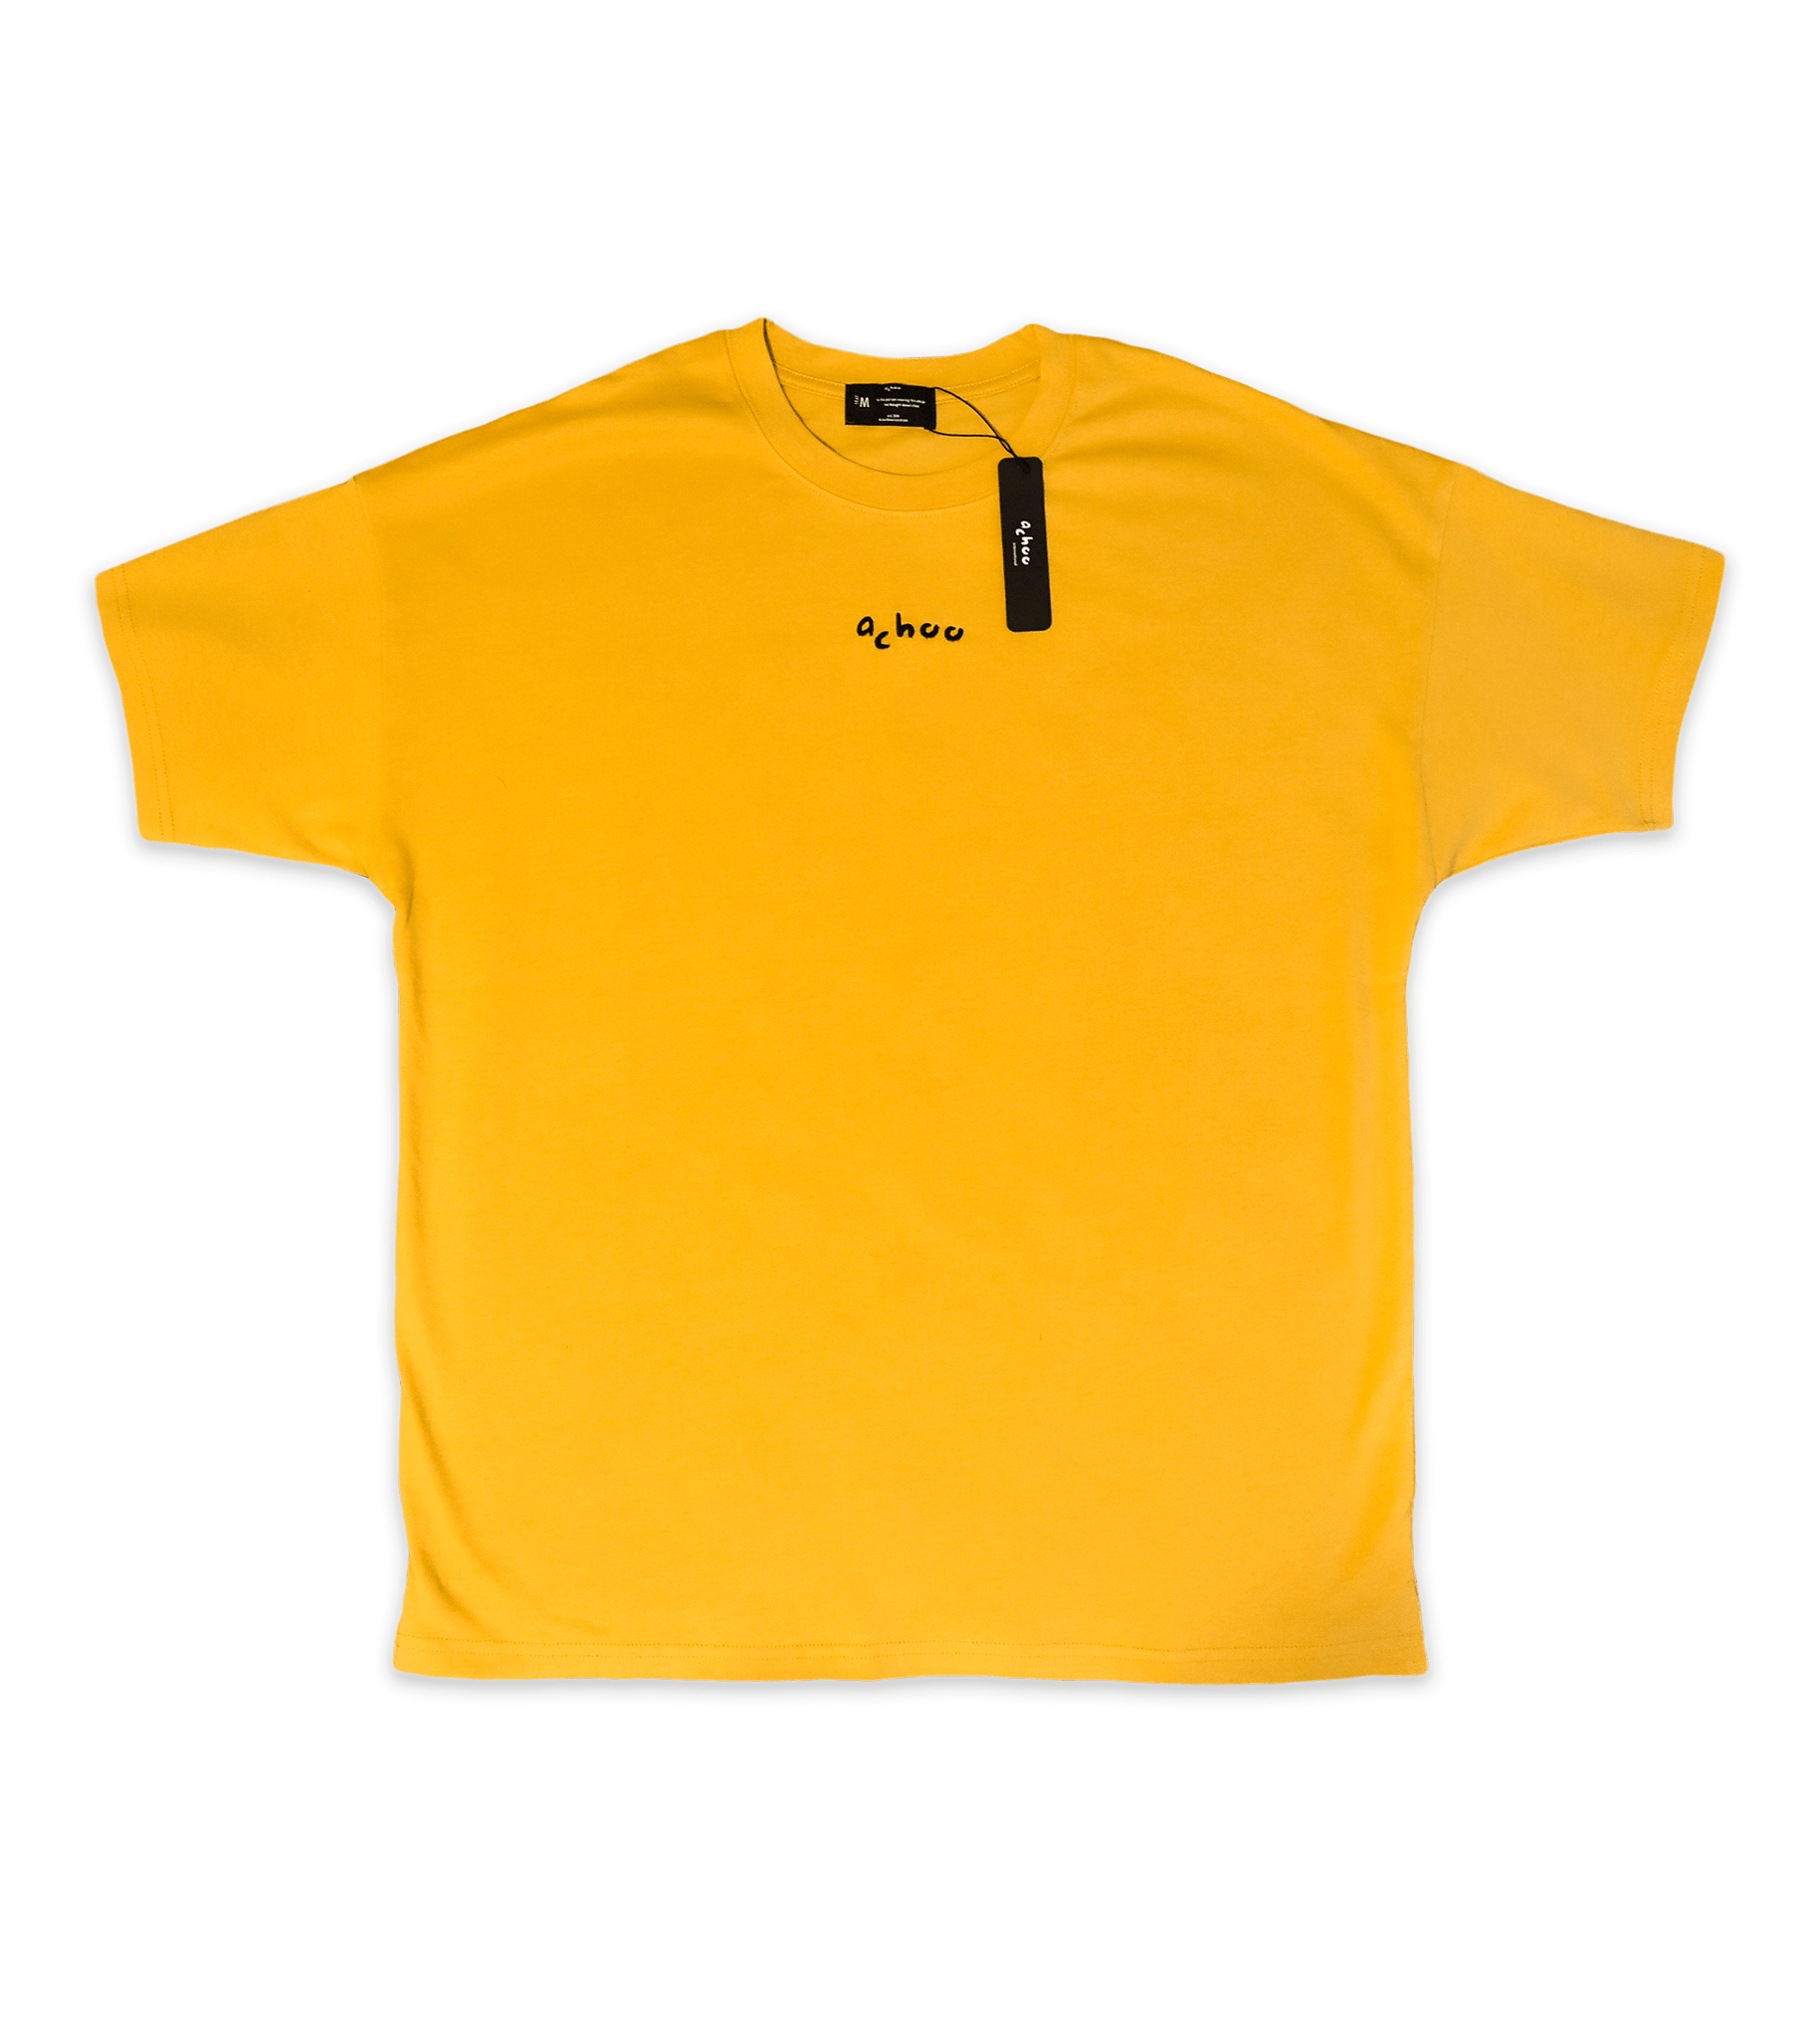 achoo international Shirt small achoo og tee | yellow fortune cookie